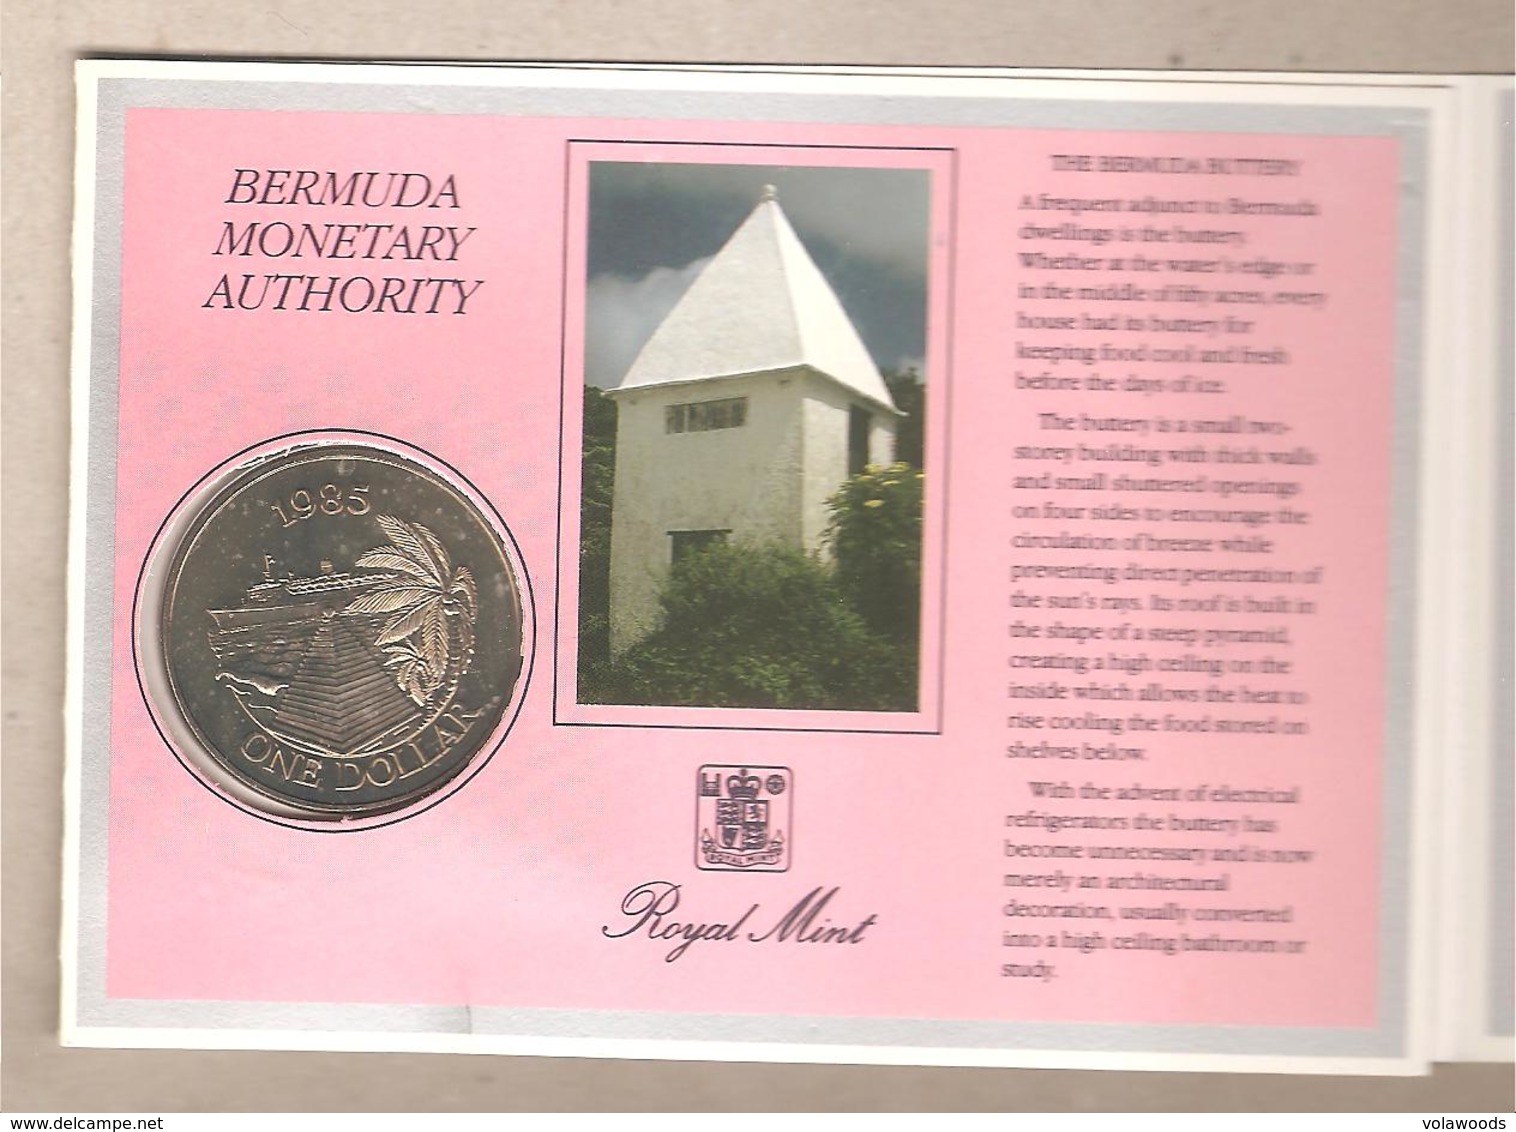 Bermuda - Moneta FdS Da 1 Dollaro In Folder Della Bermuda's Cruise Ships - 1985 - Bermudes